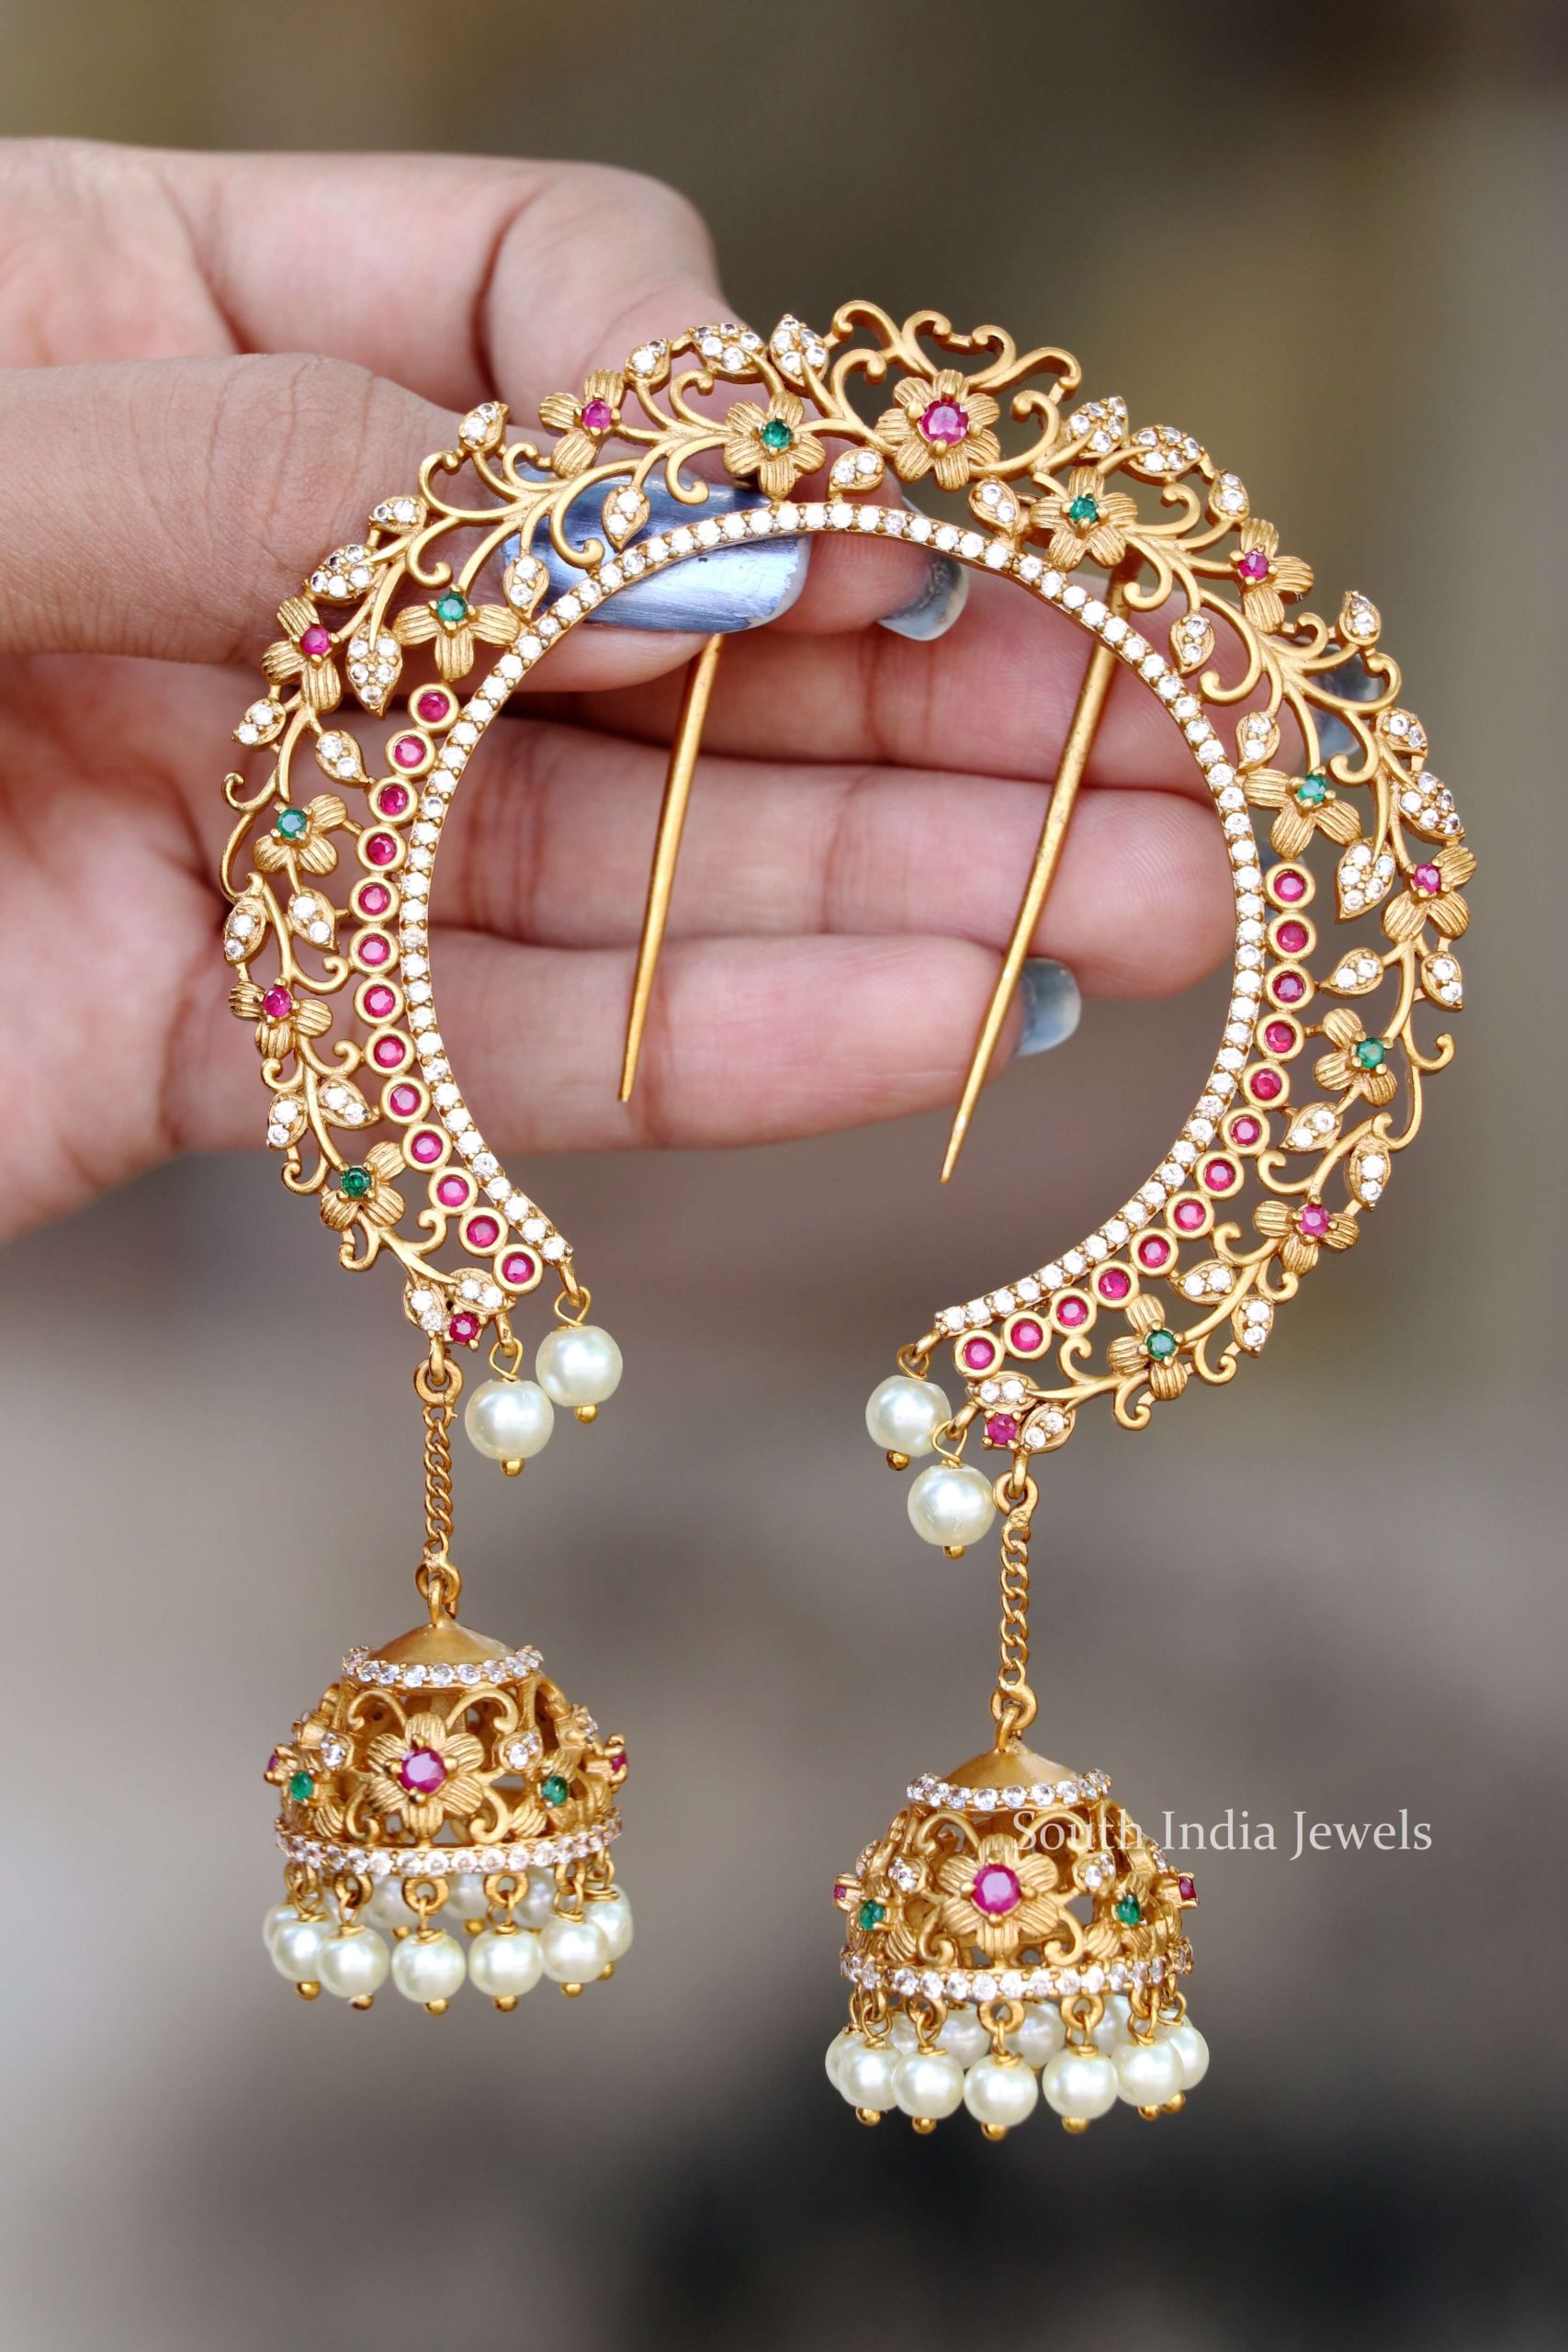 Gold Finish Jhumka Hair Accessory - South India Jewels